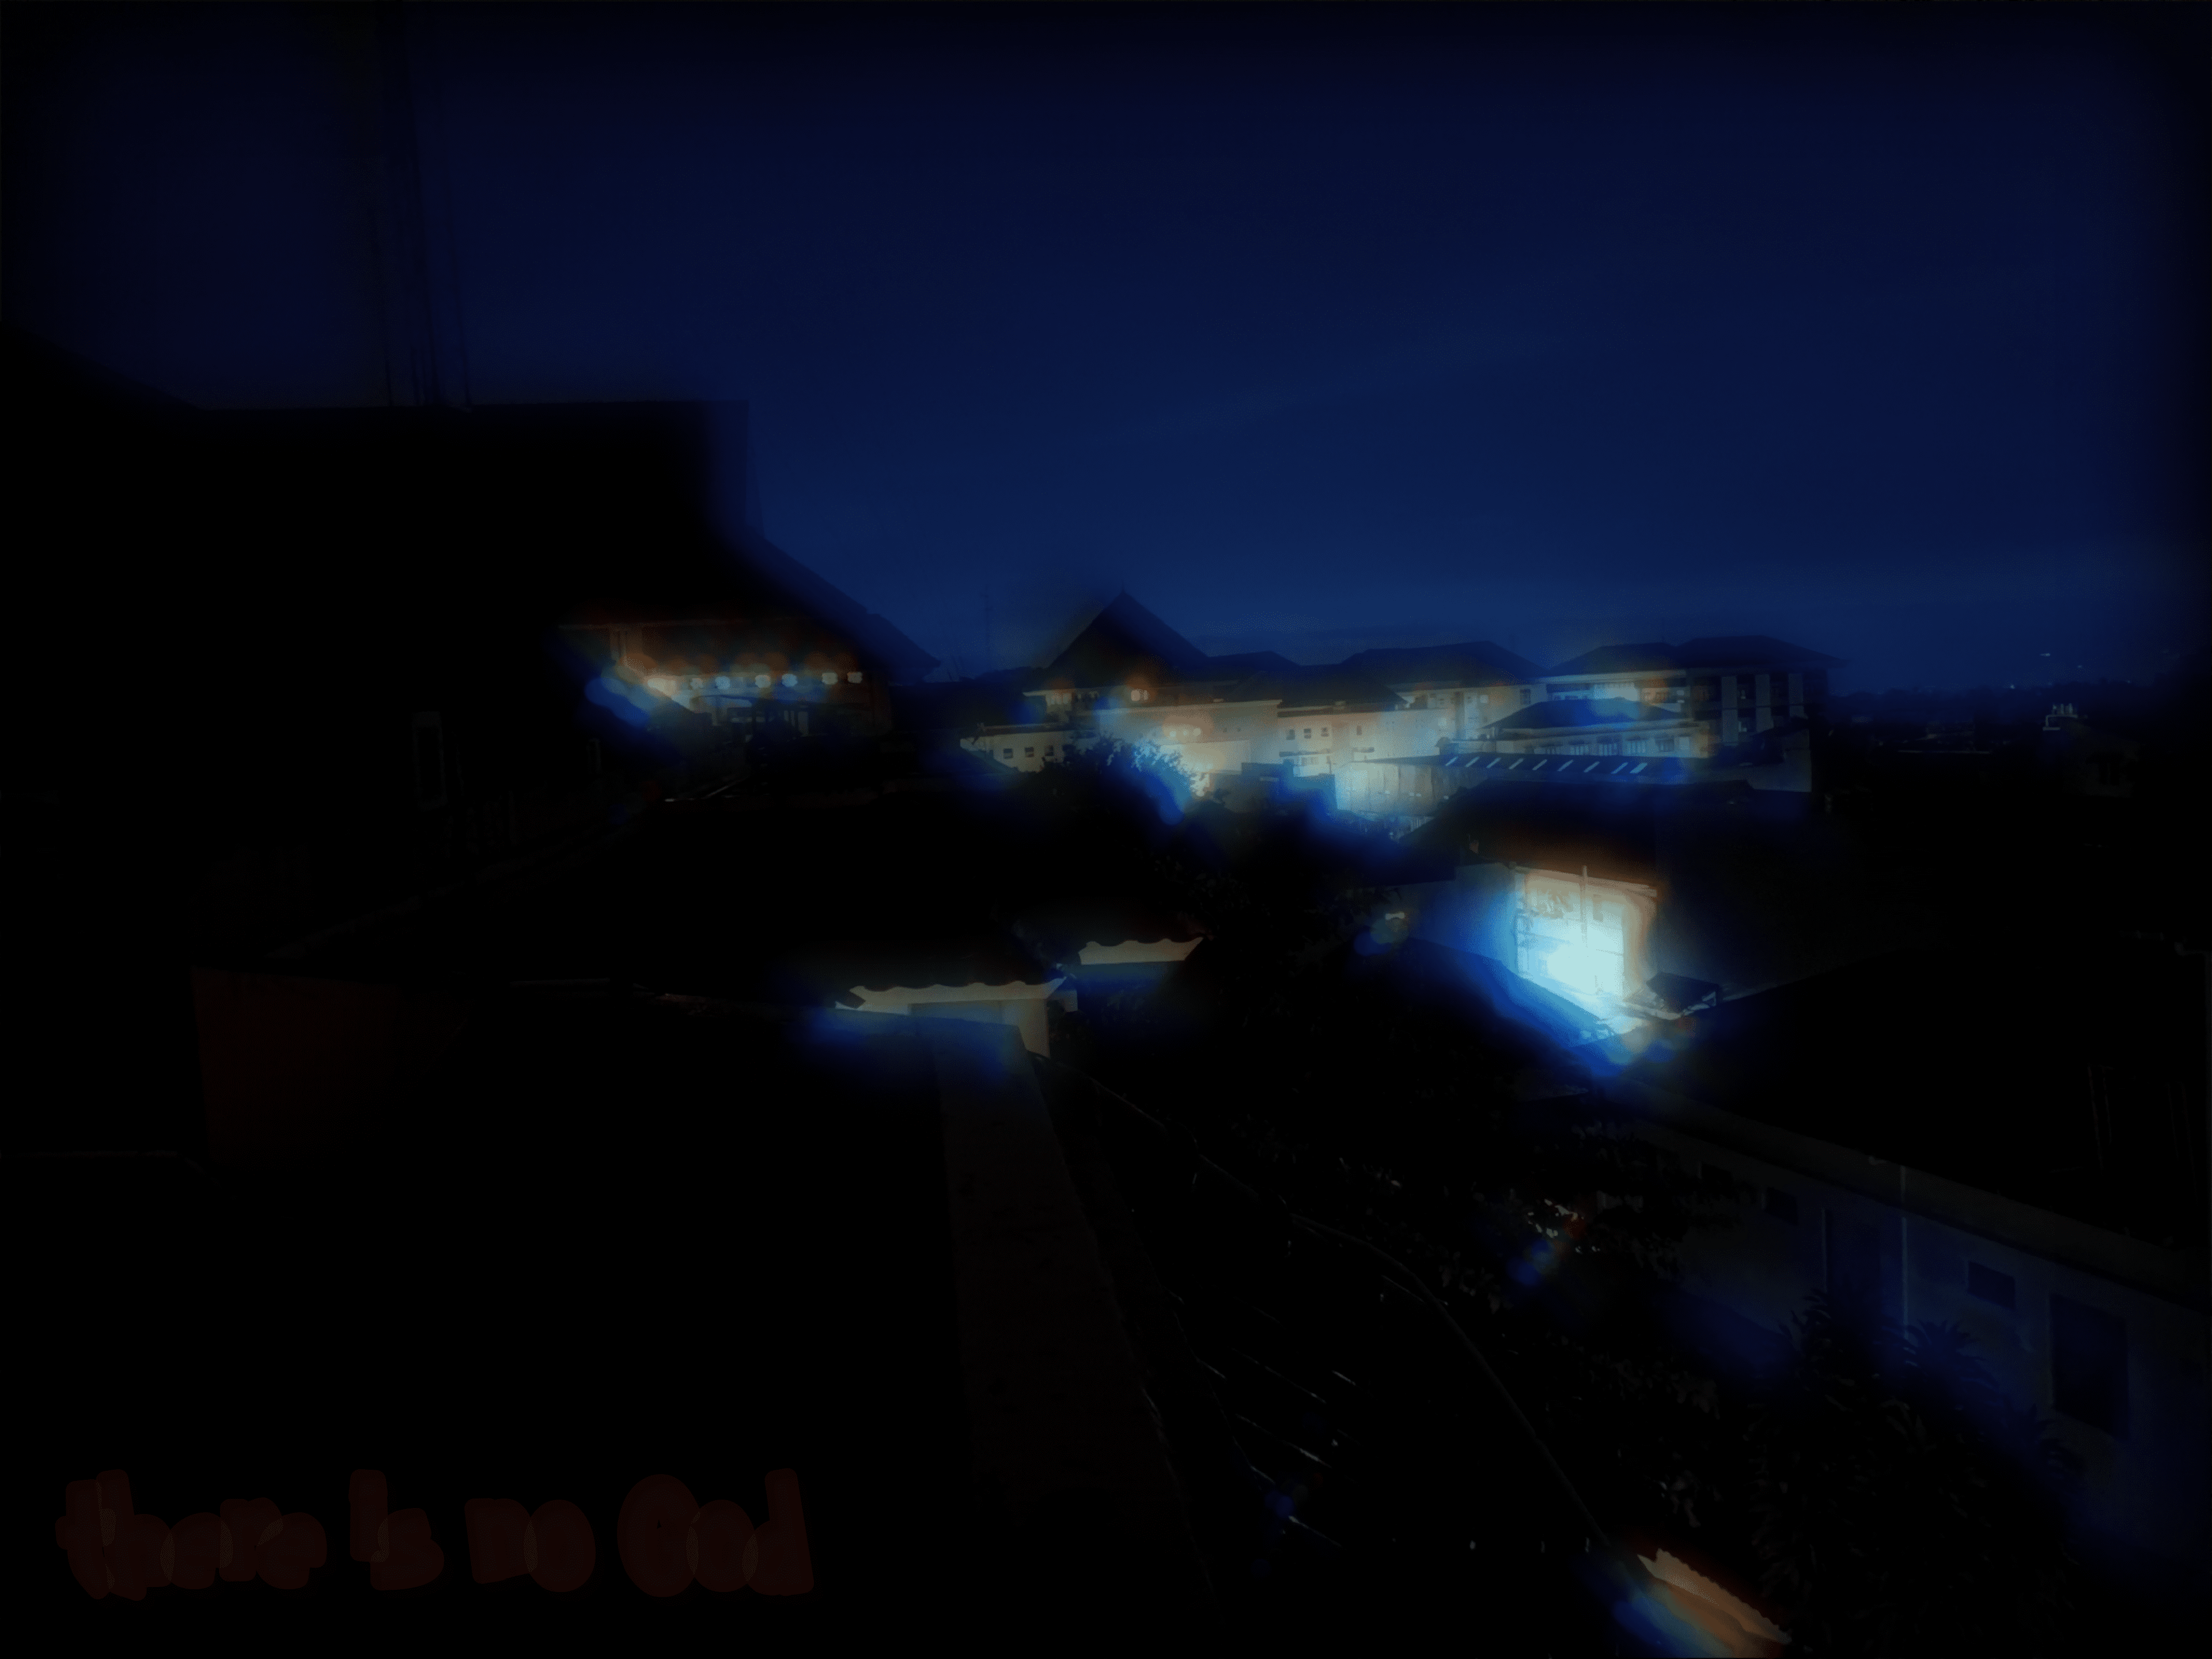 roof on the blury night sky